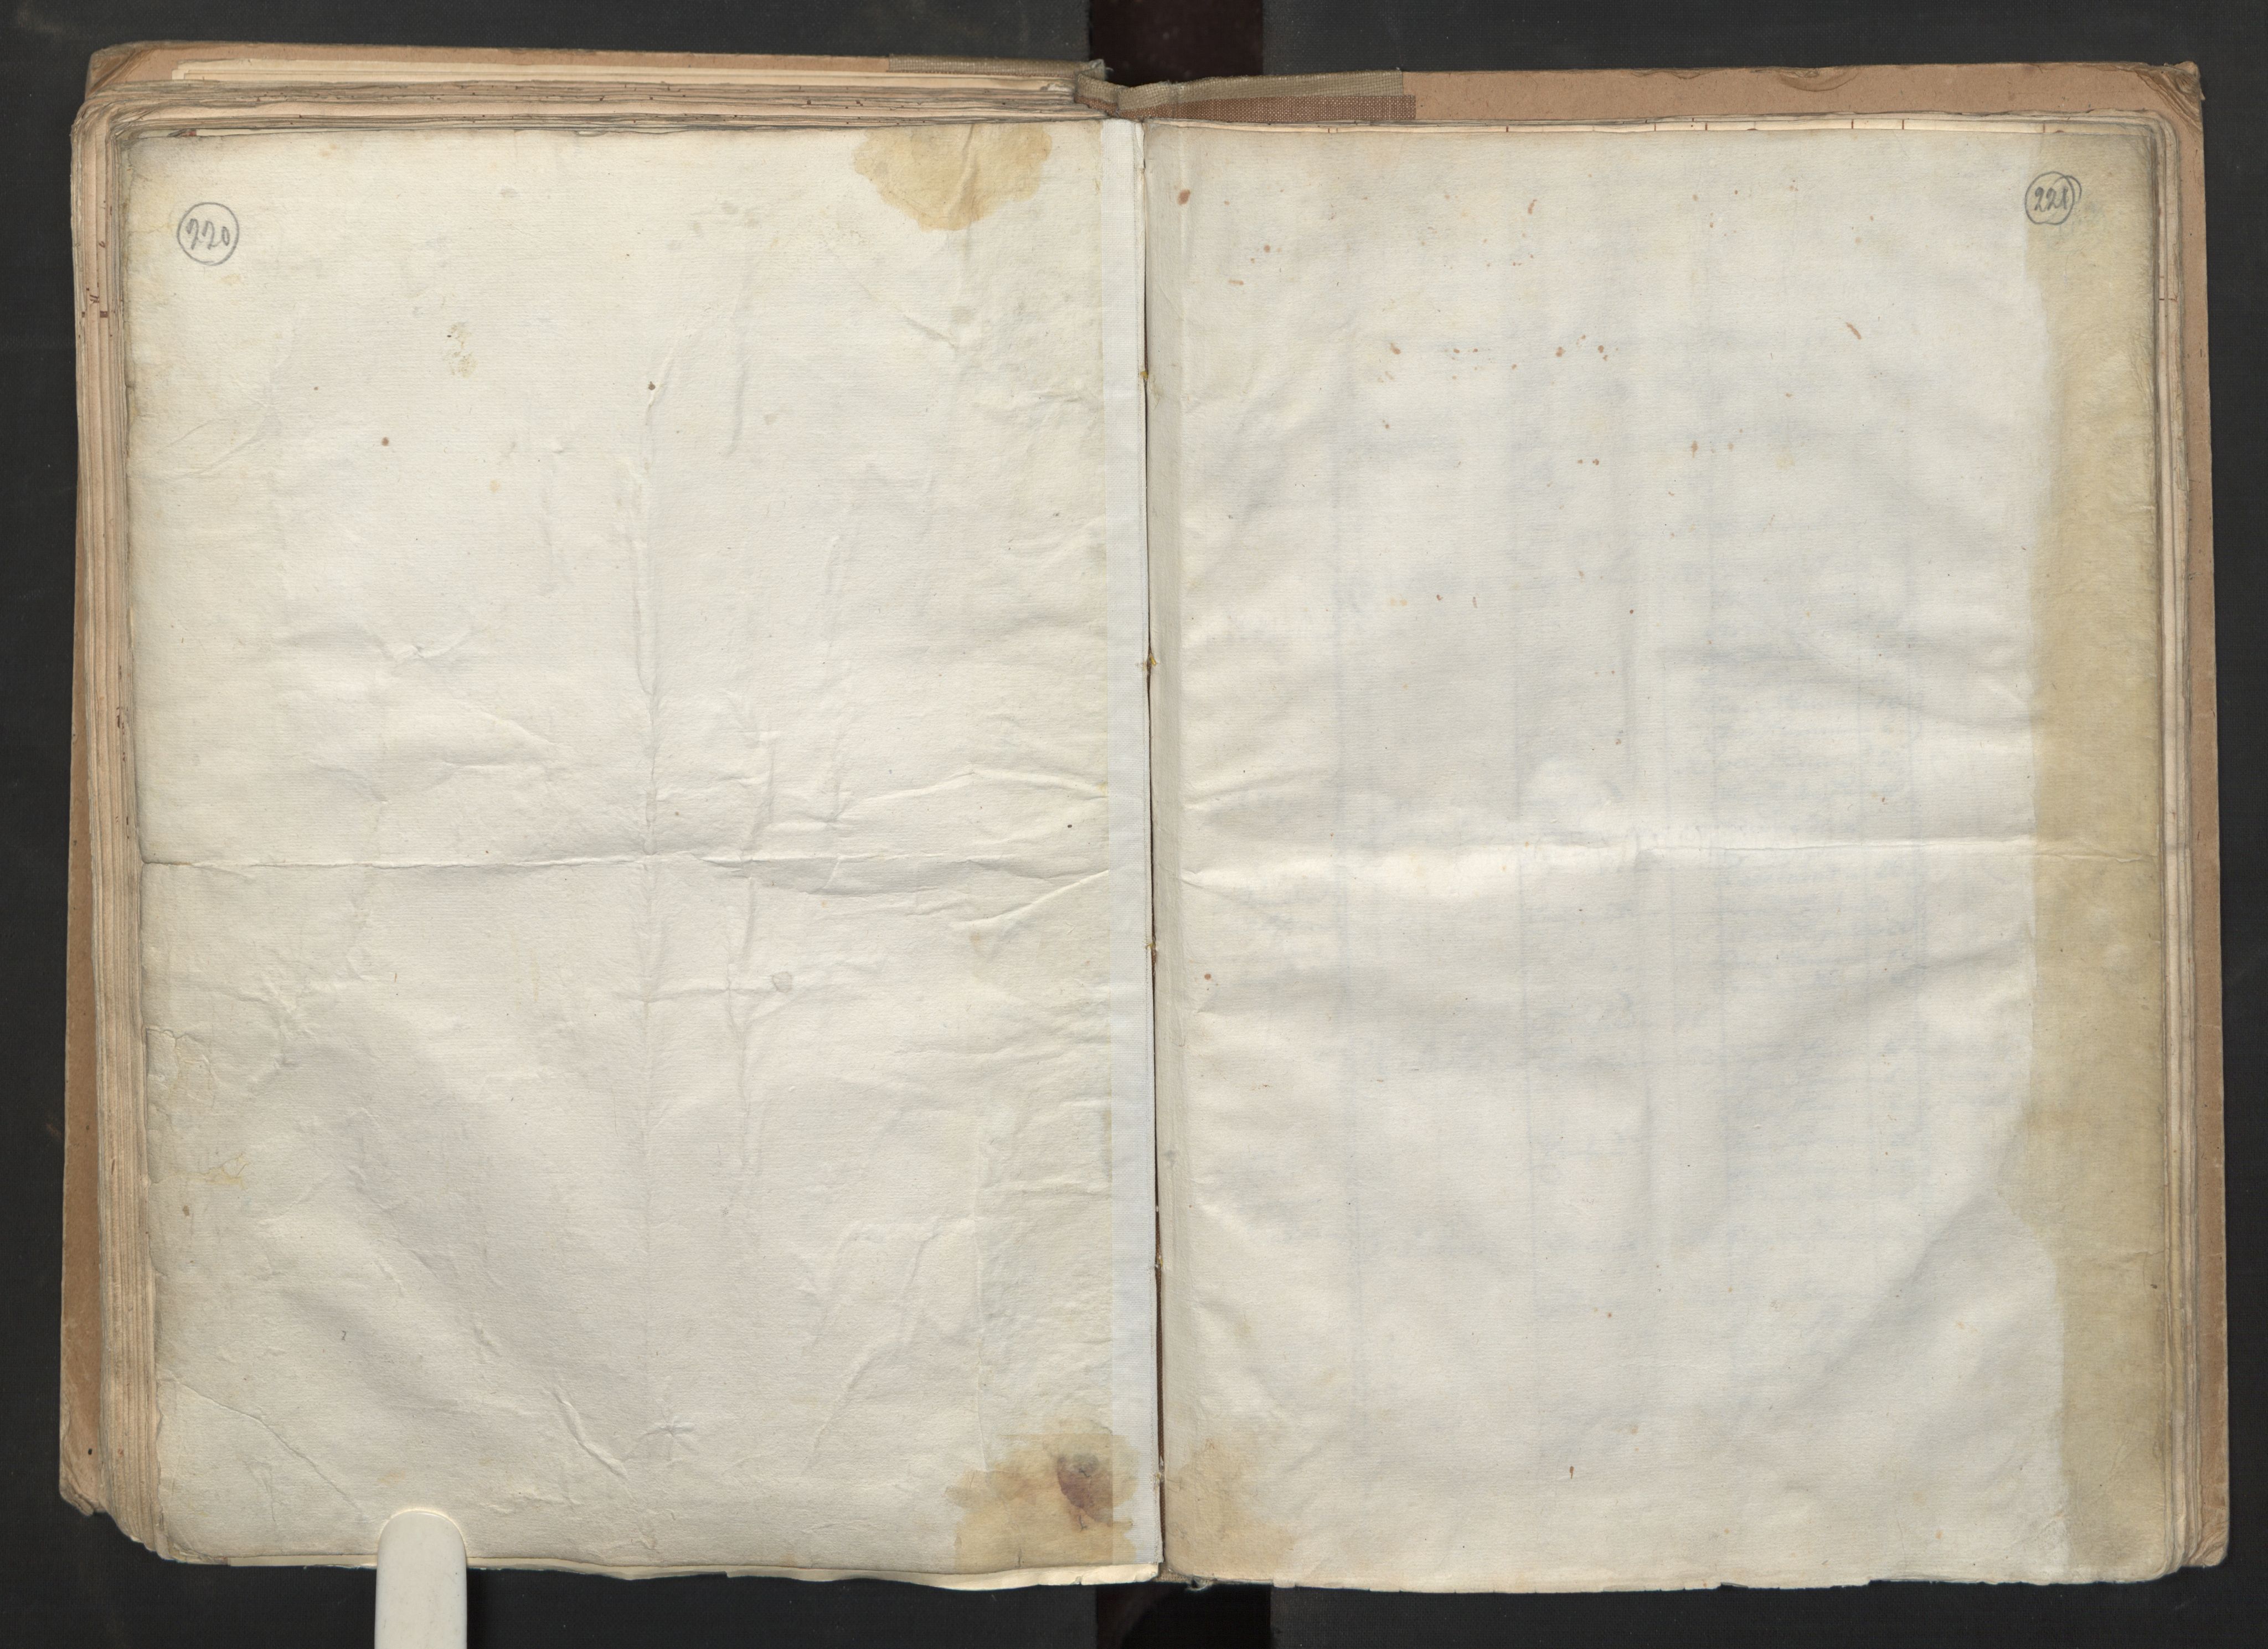 RA, Census (manntall) 1701, no. 6: Sunnhordland fogderi and Hardanger fogderi, 1701, p. 220-221